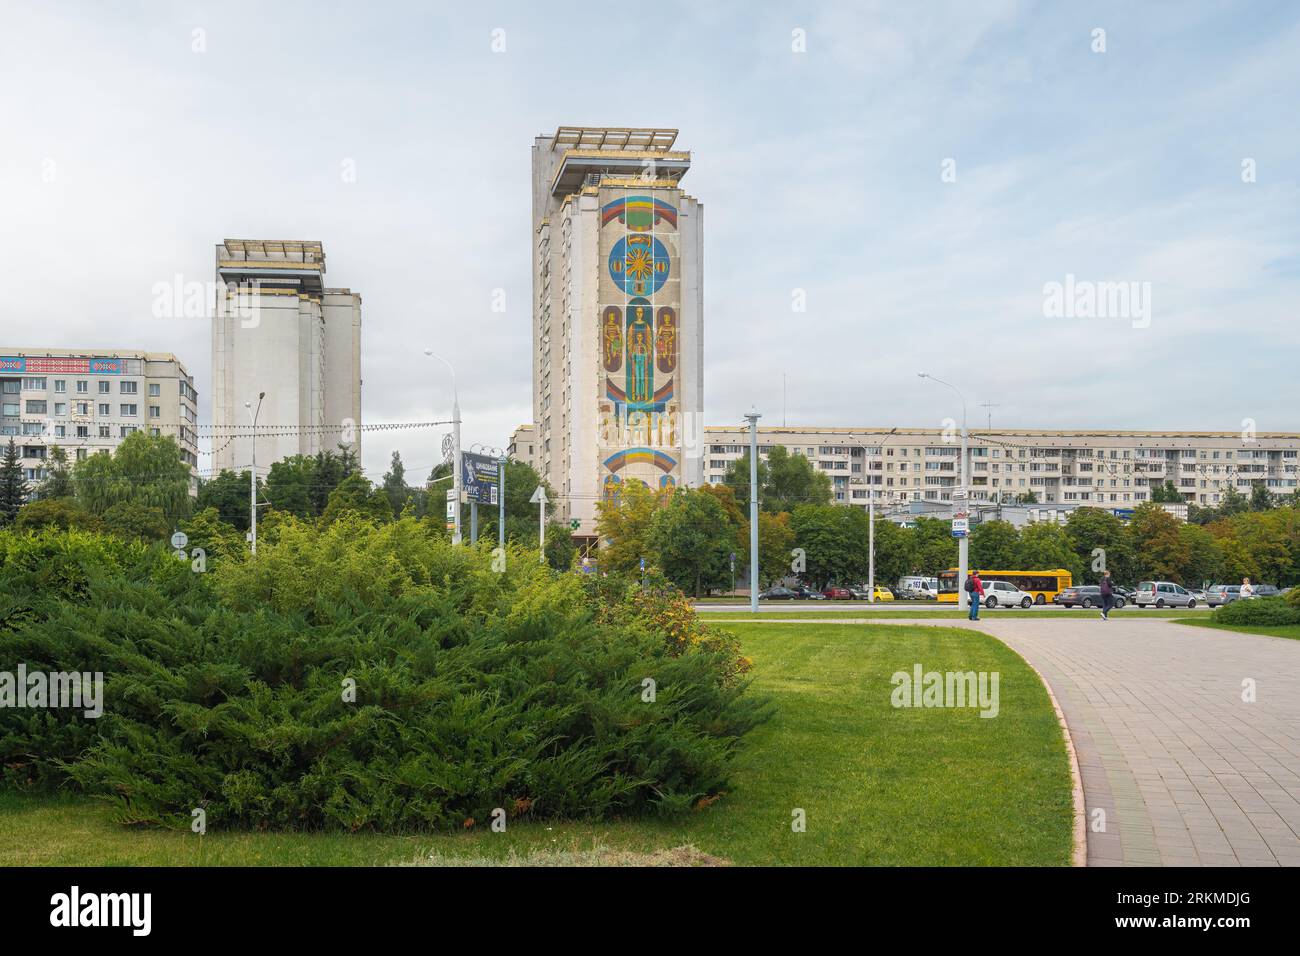 Soviet Era Buildings with City Builder Mosaic by Alexander Kishchenko - Minsk, Belarus Stock Photo